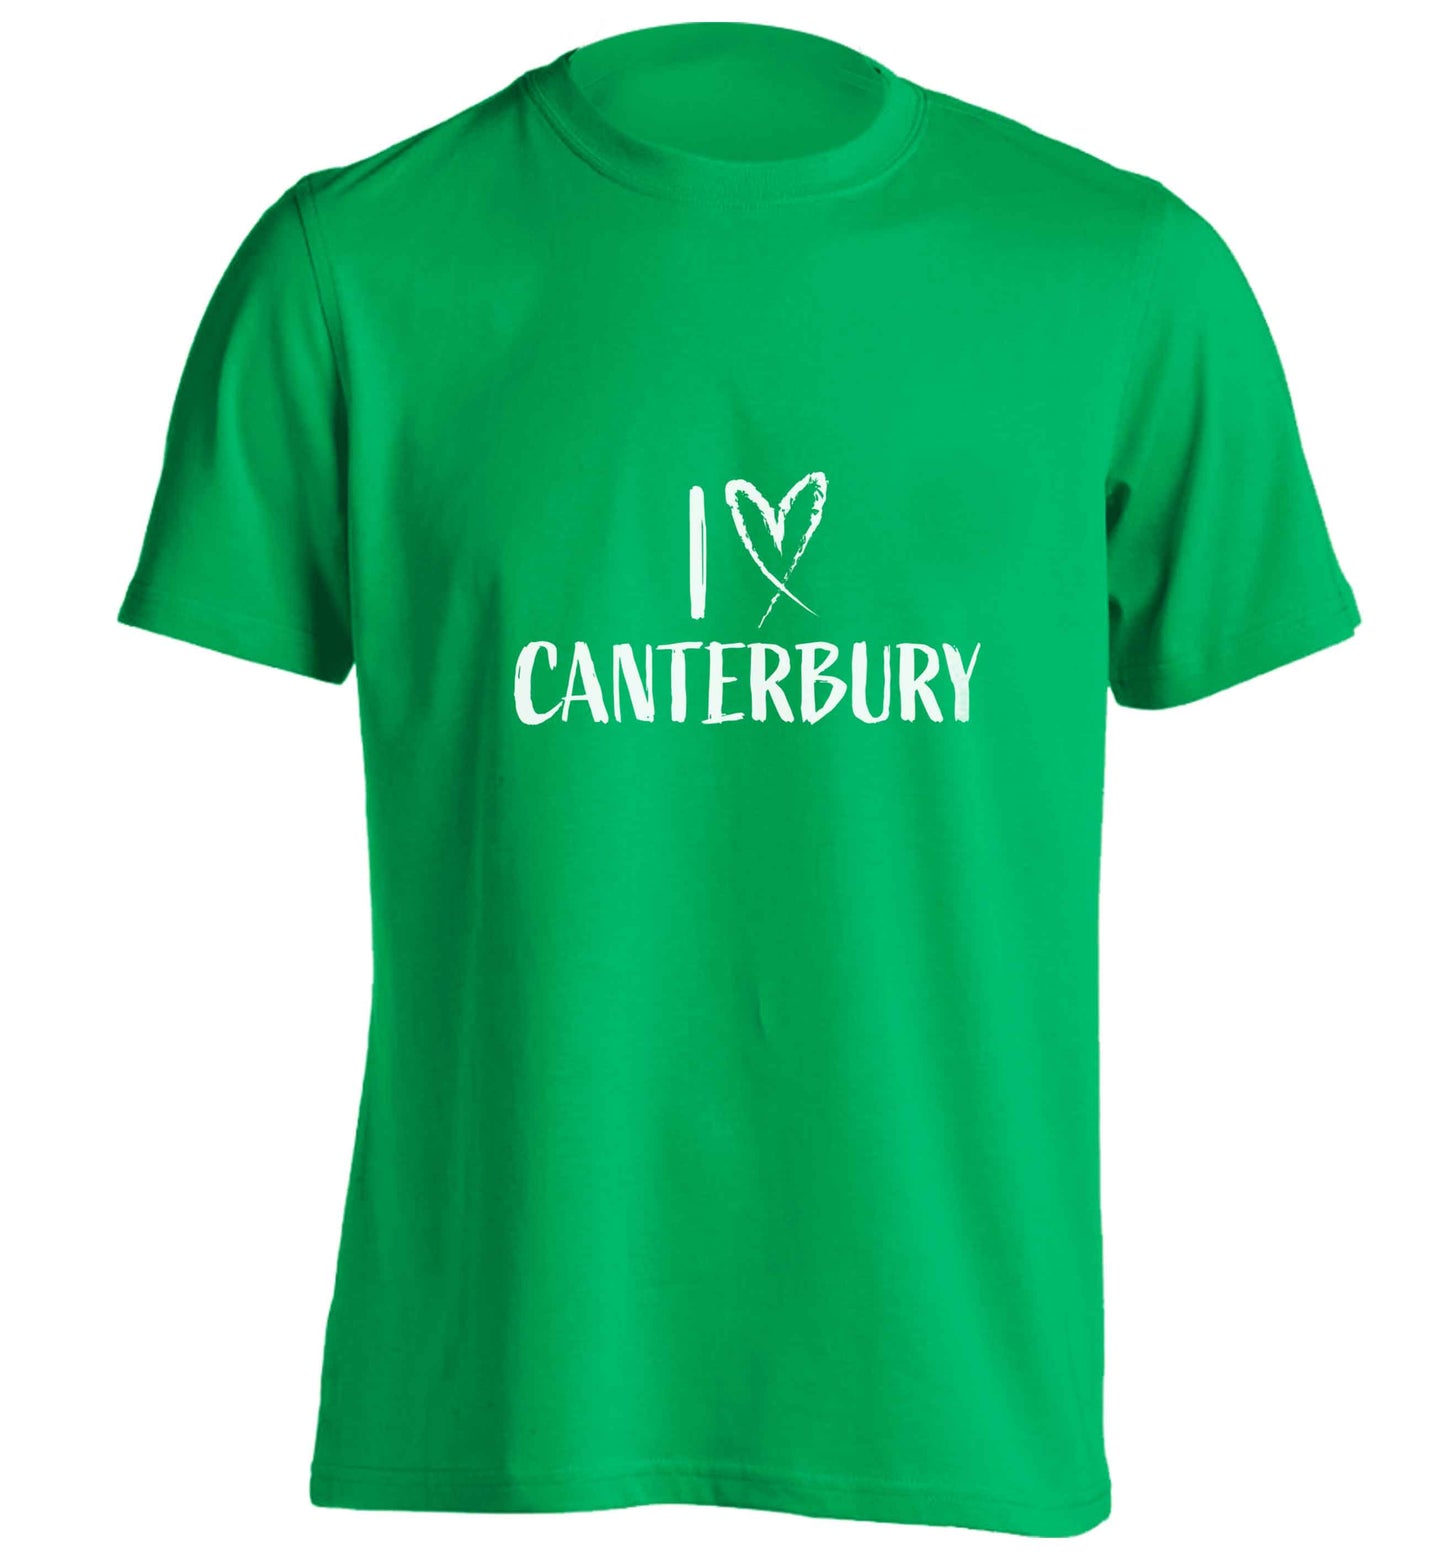 I love Canterbury adults unisex green Tshirt 2XL